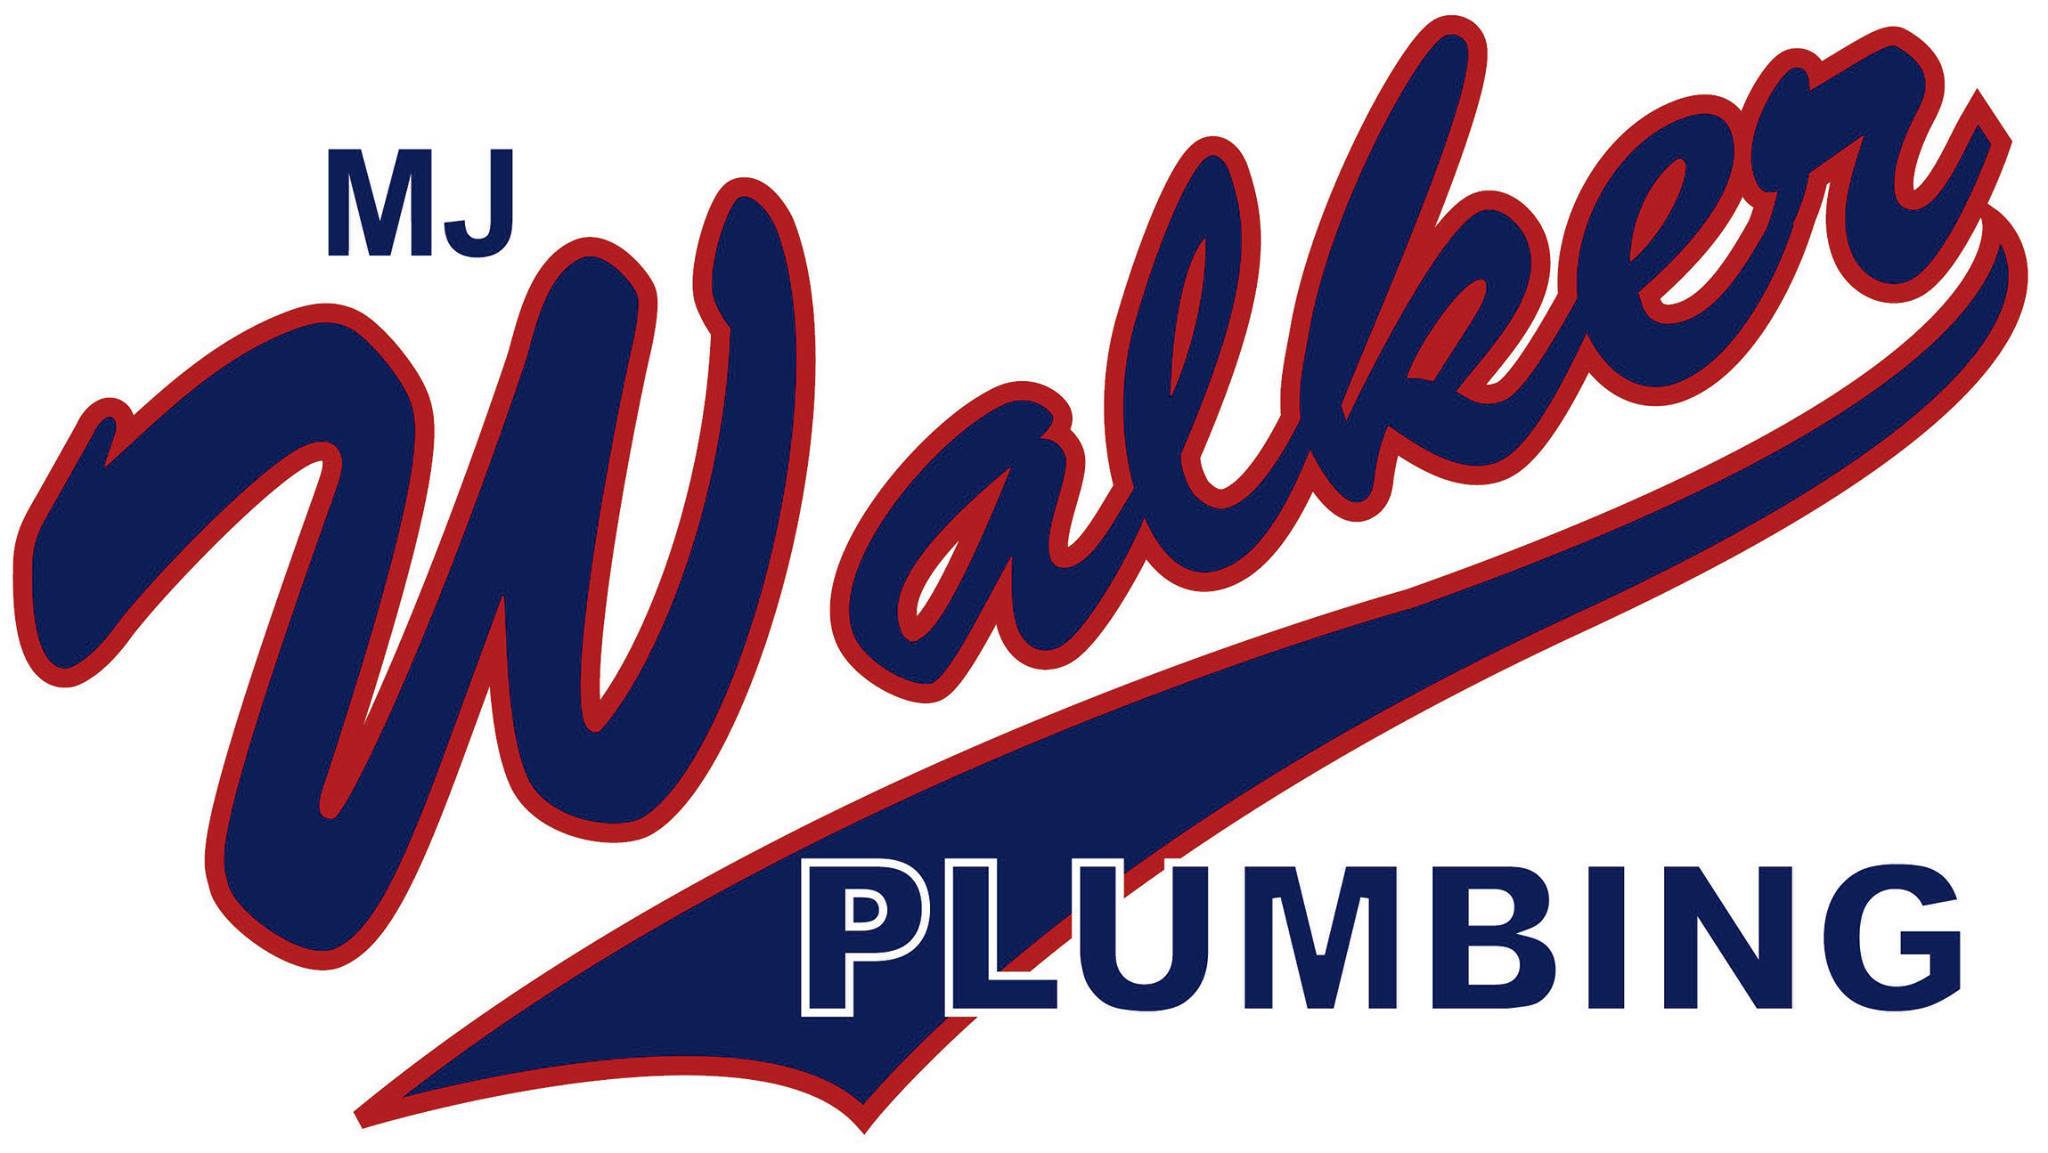 M.J. Walker Plumbing and Gasfitting.